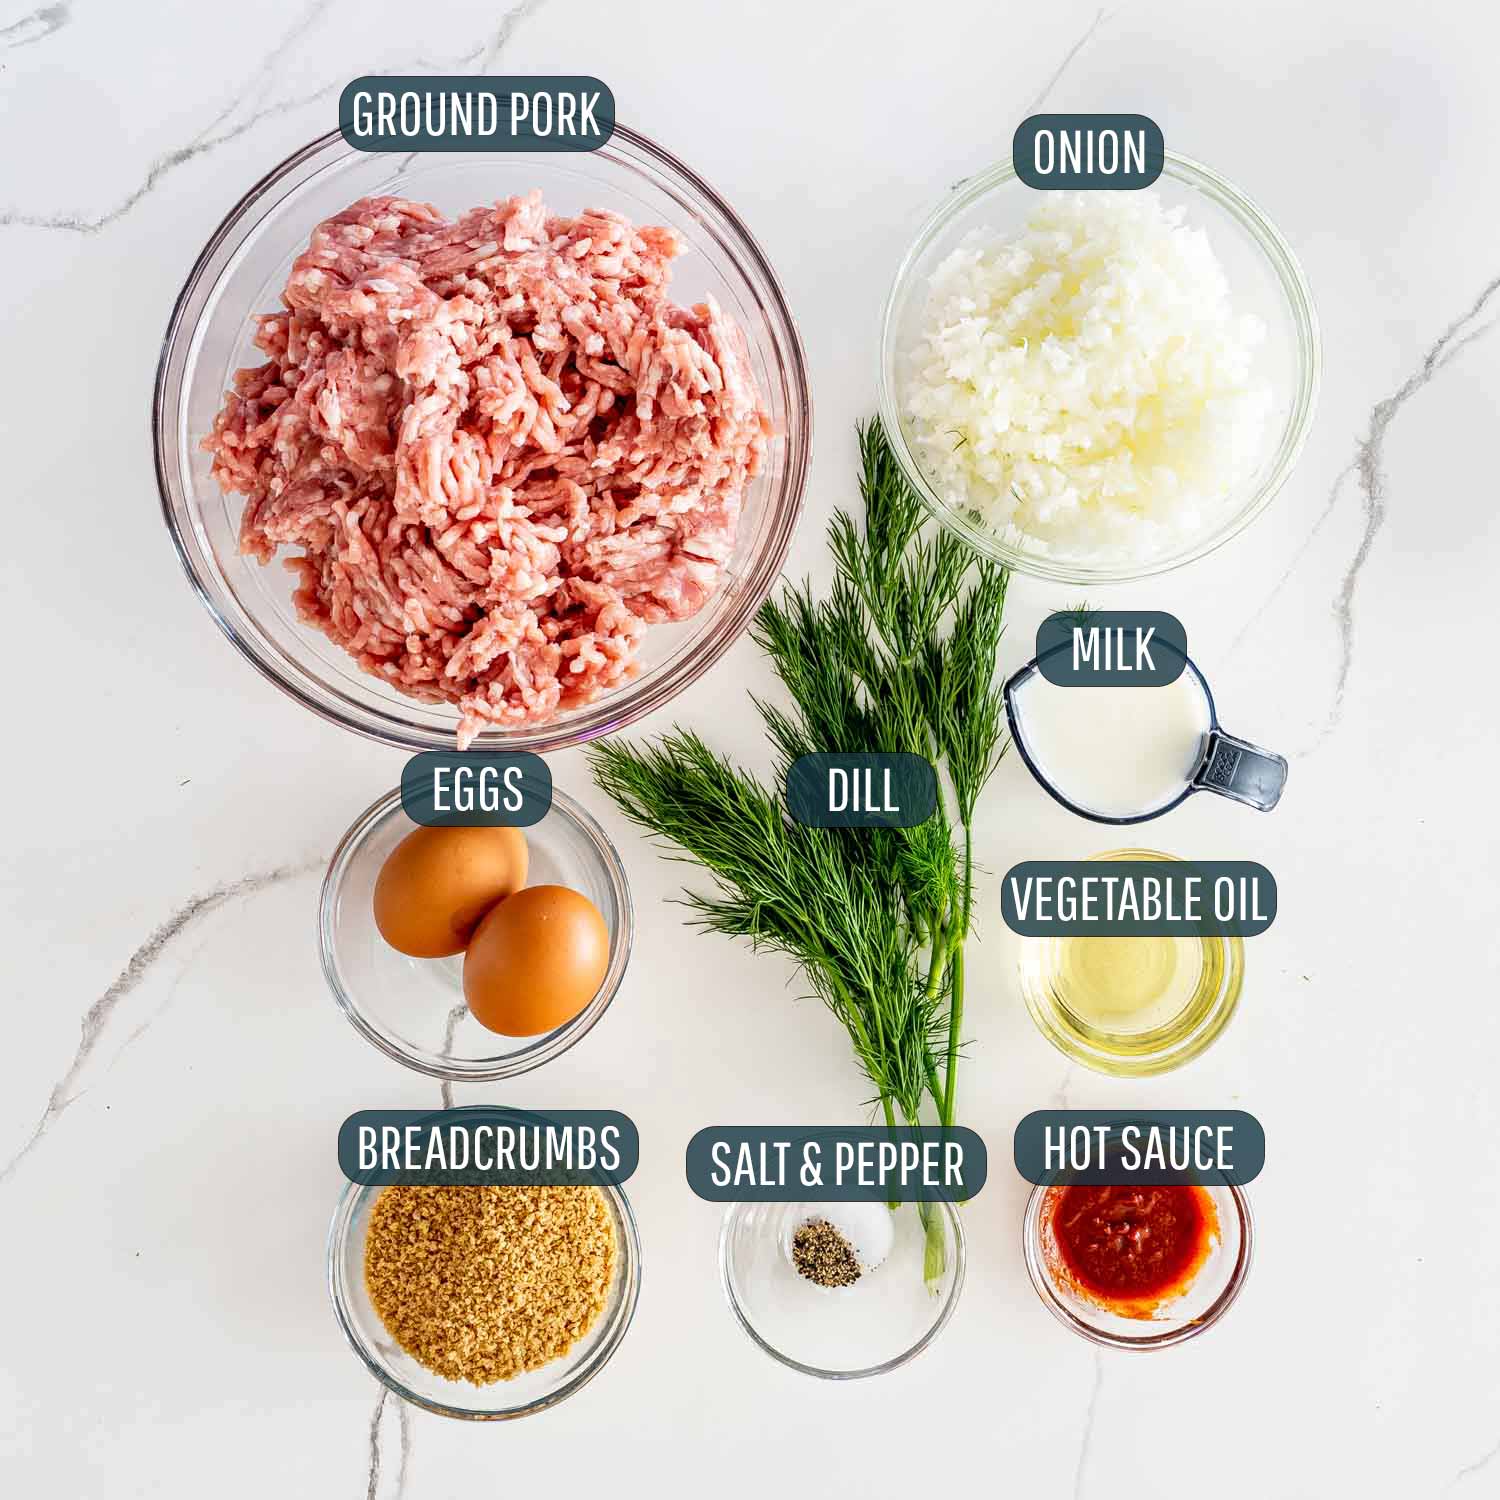 ingredients needed to make meatballs with mushroom gravy.